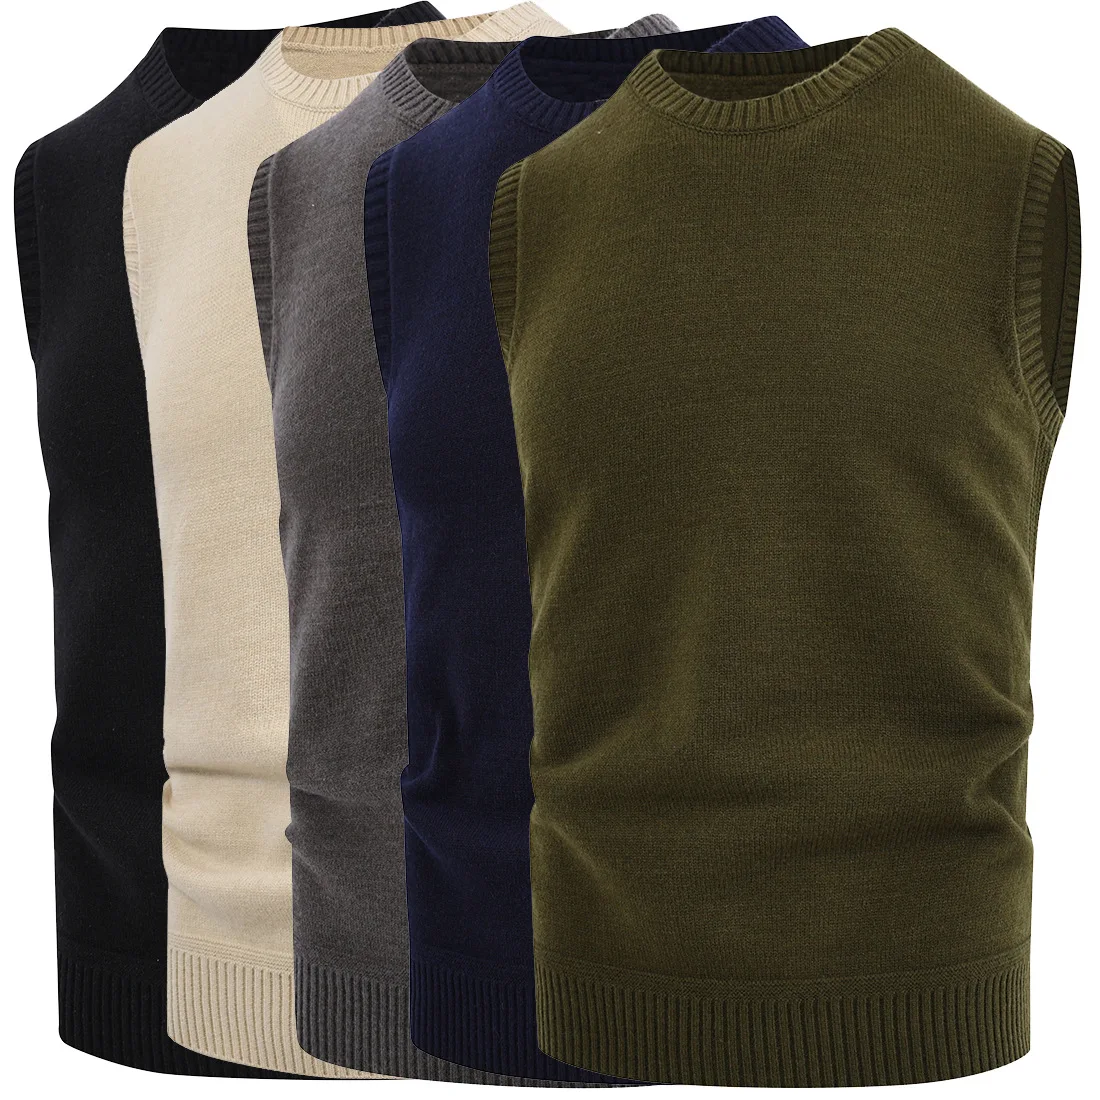 Sweater Vest Men Spring Autumn Oversize Mens Vests Solid Simple All-match V-neck Couples Retro Soft Clothing Plus Size S-2XL